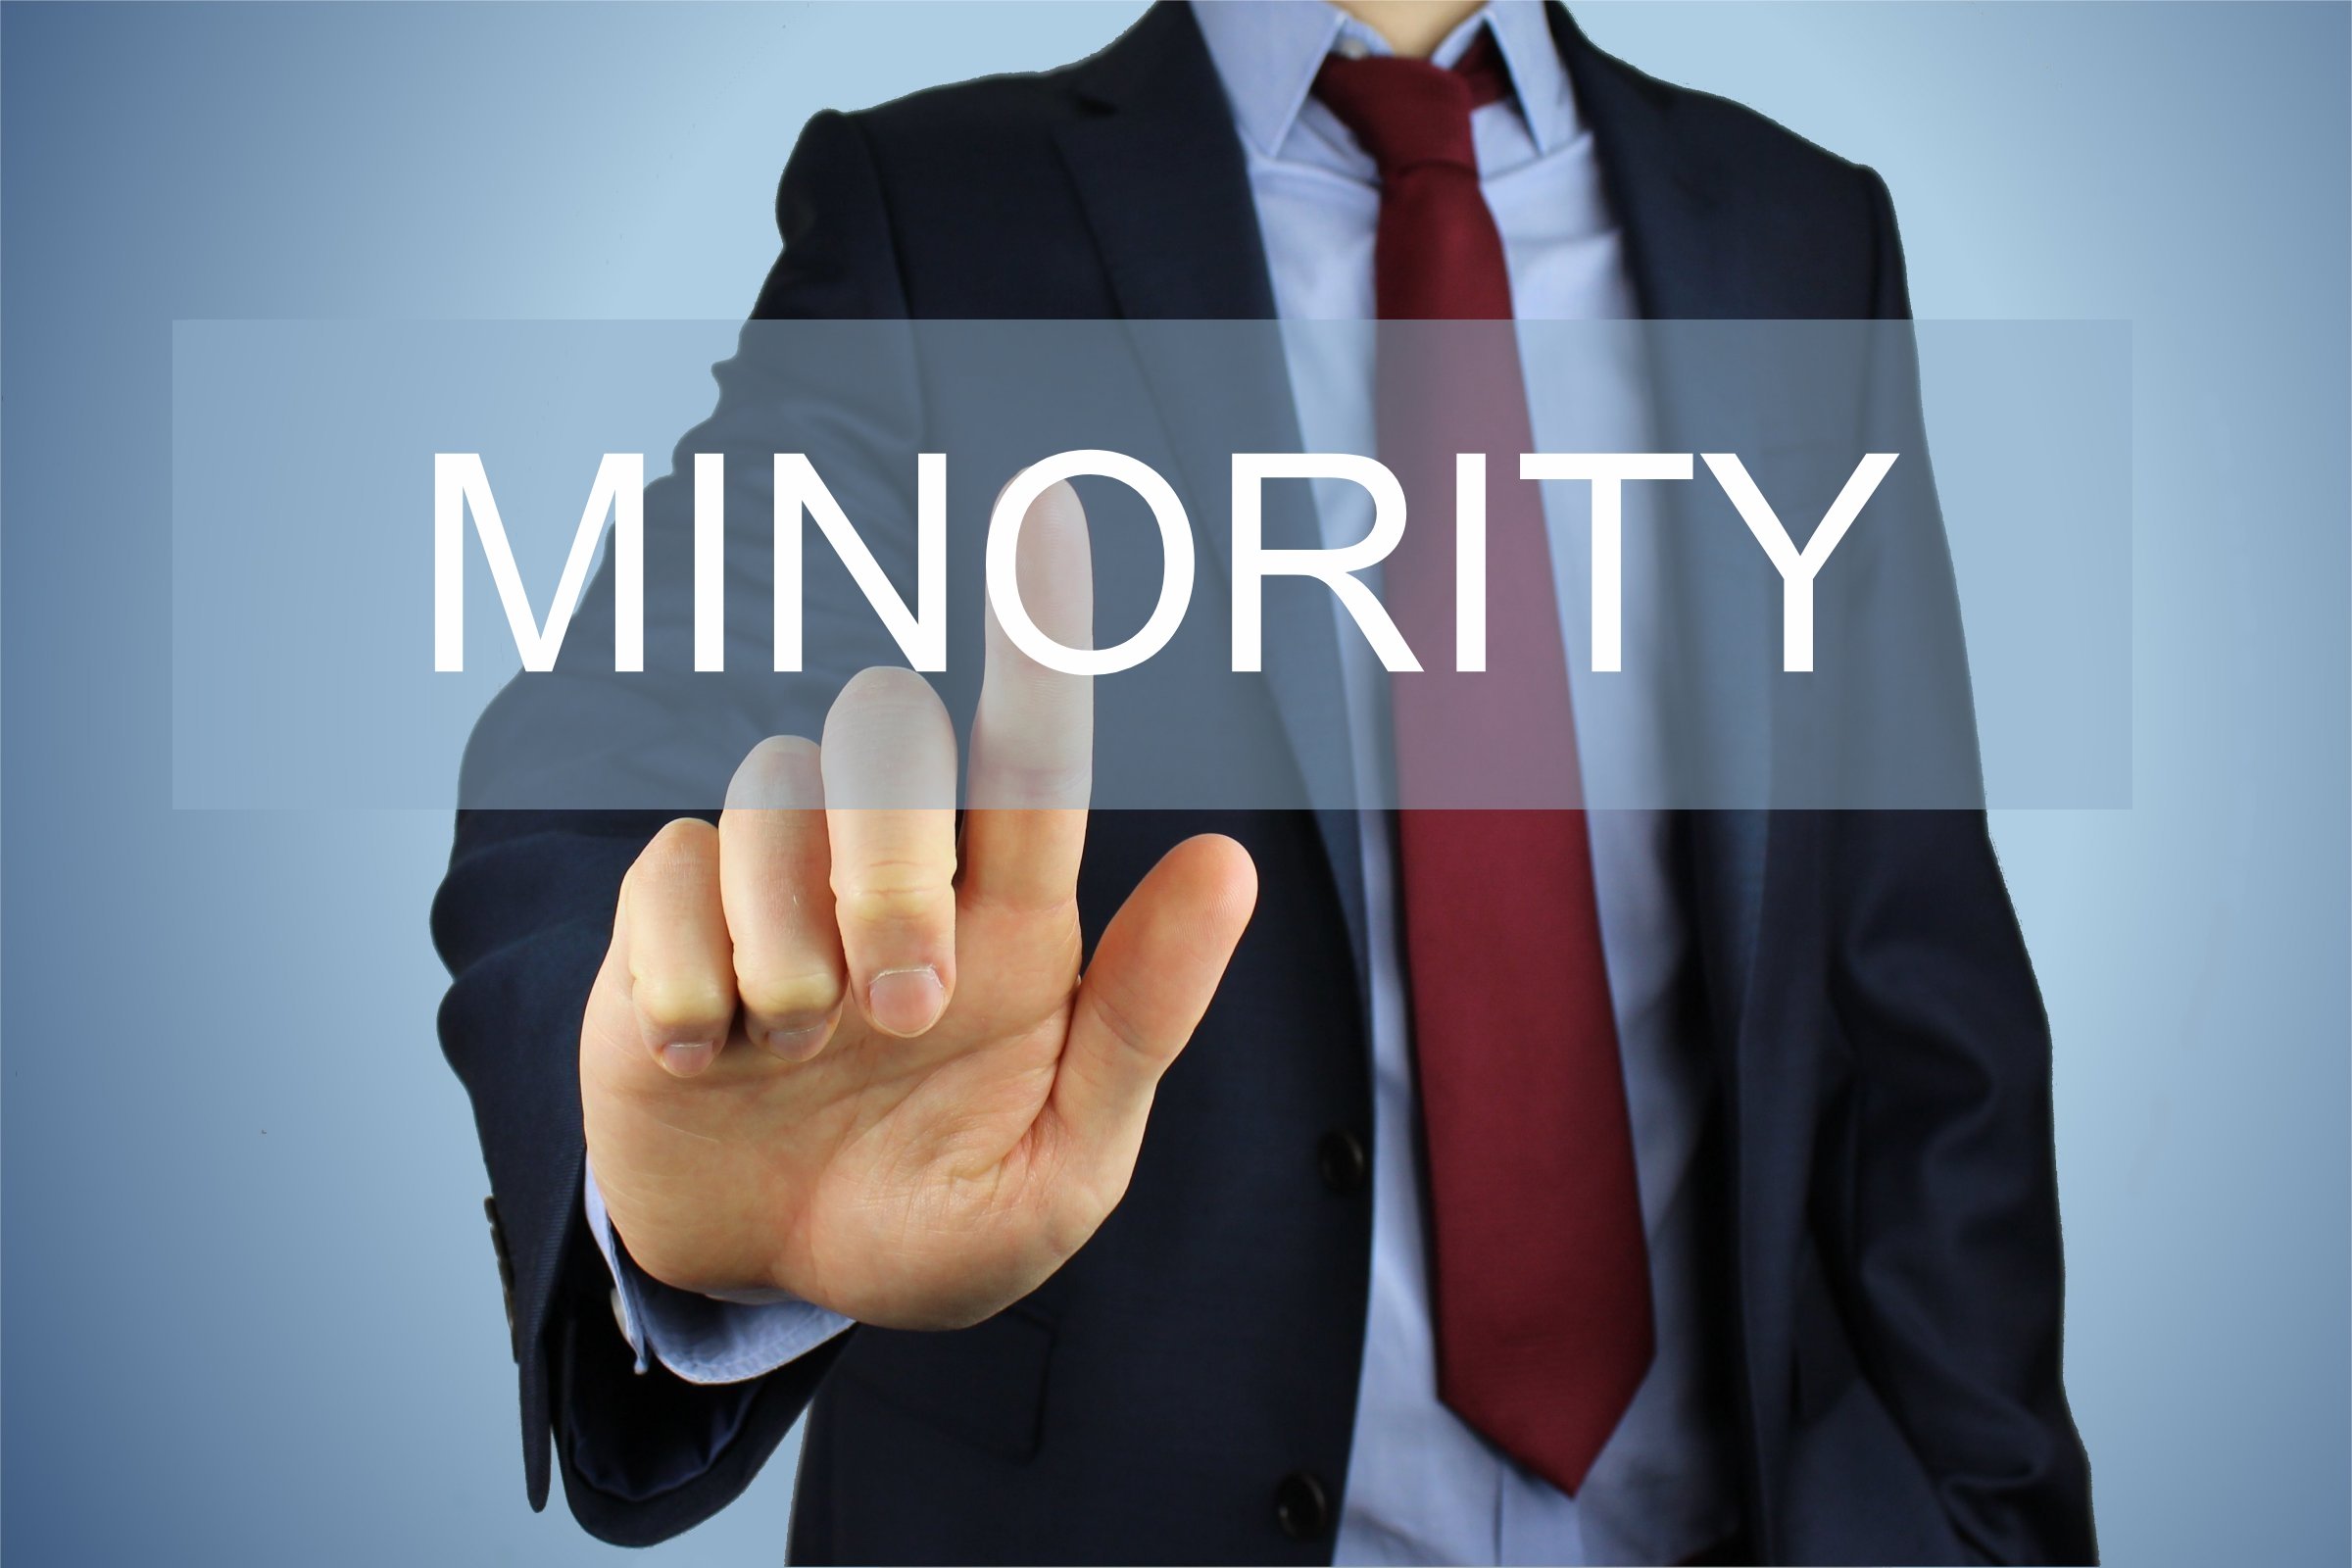 minority